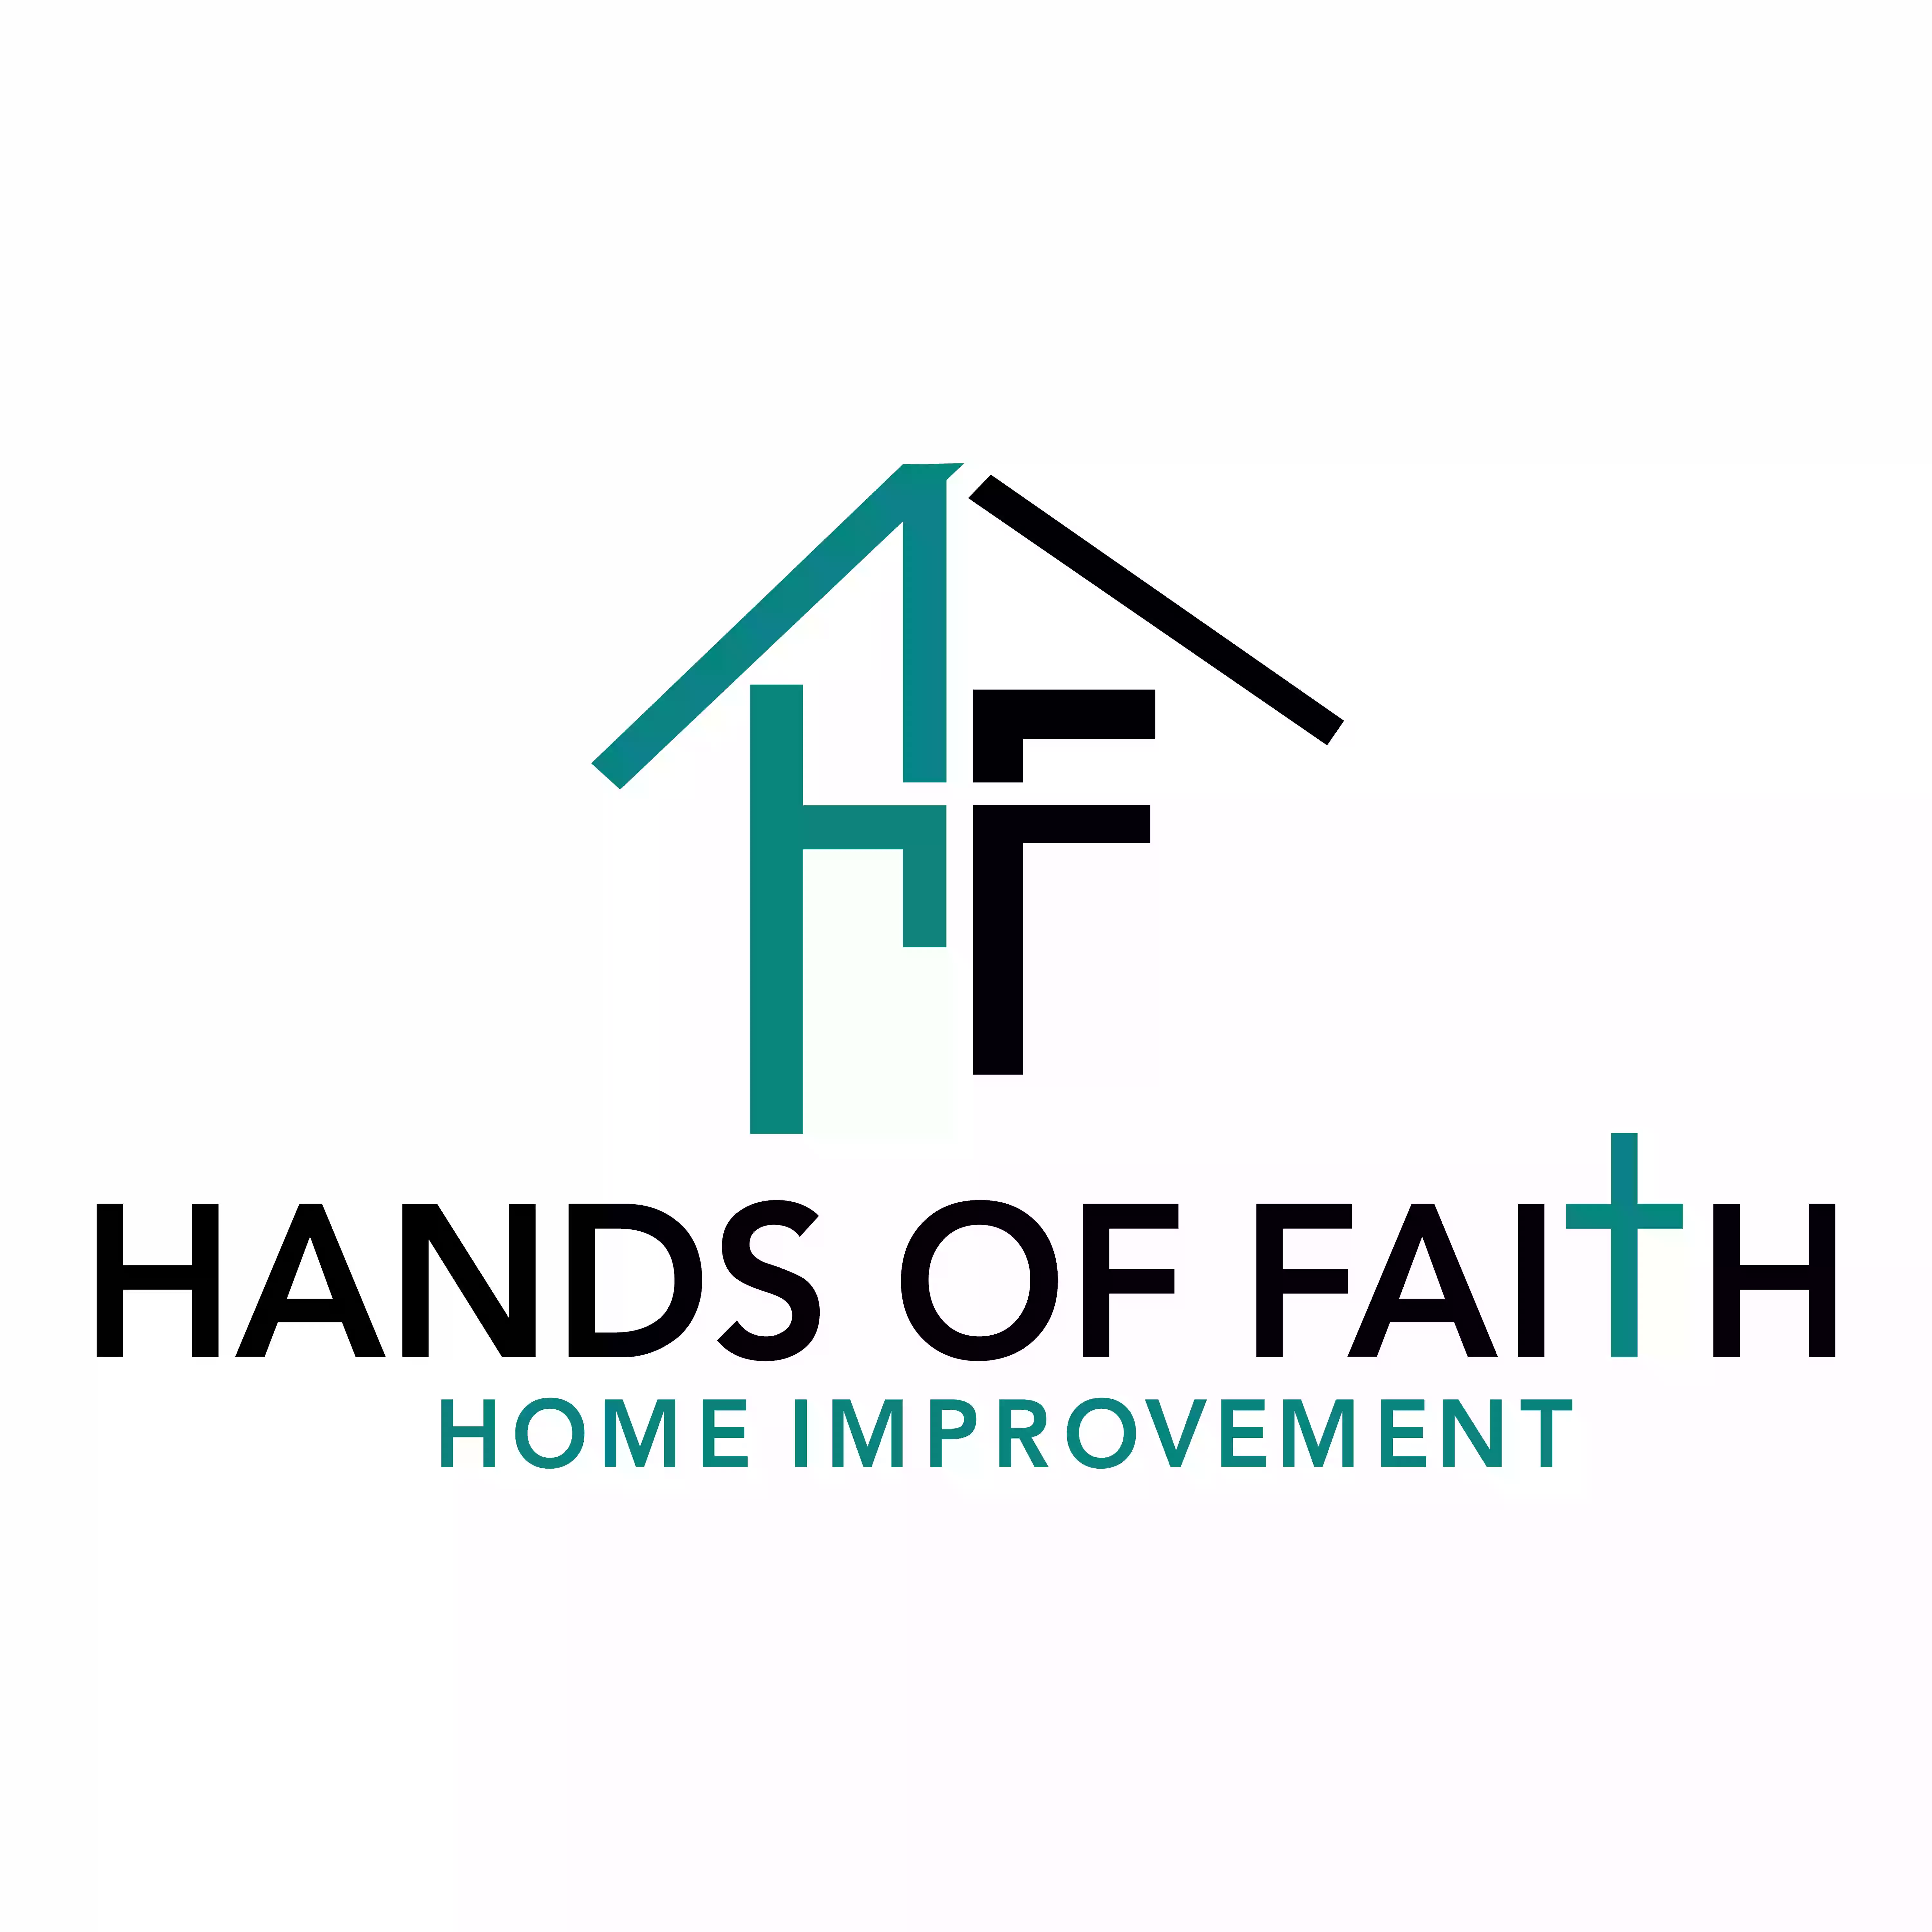 Hands of Faith Home Improvement Services